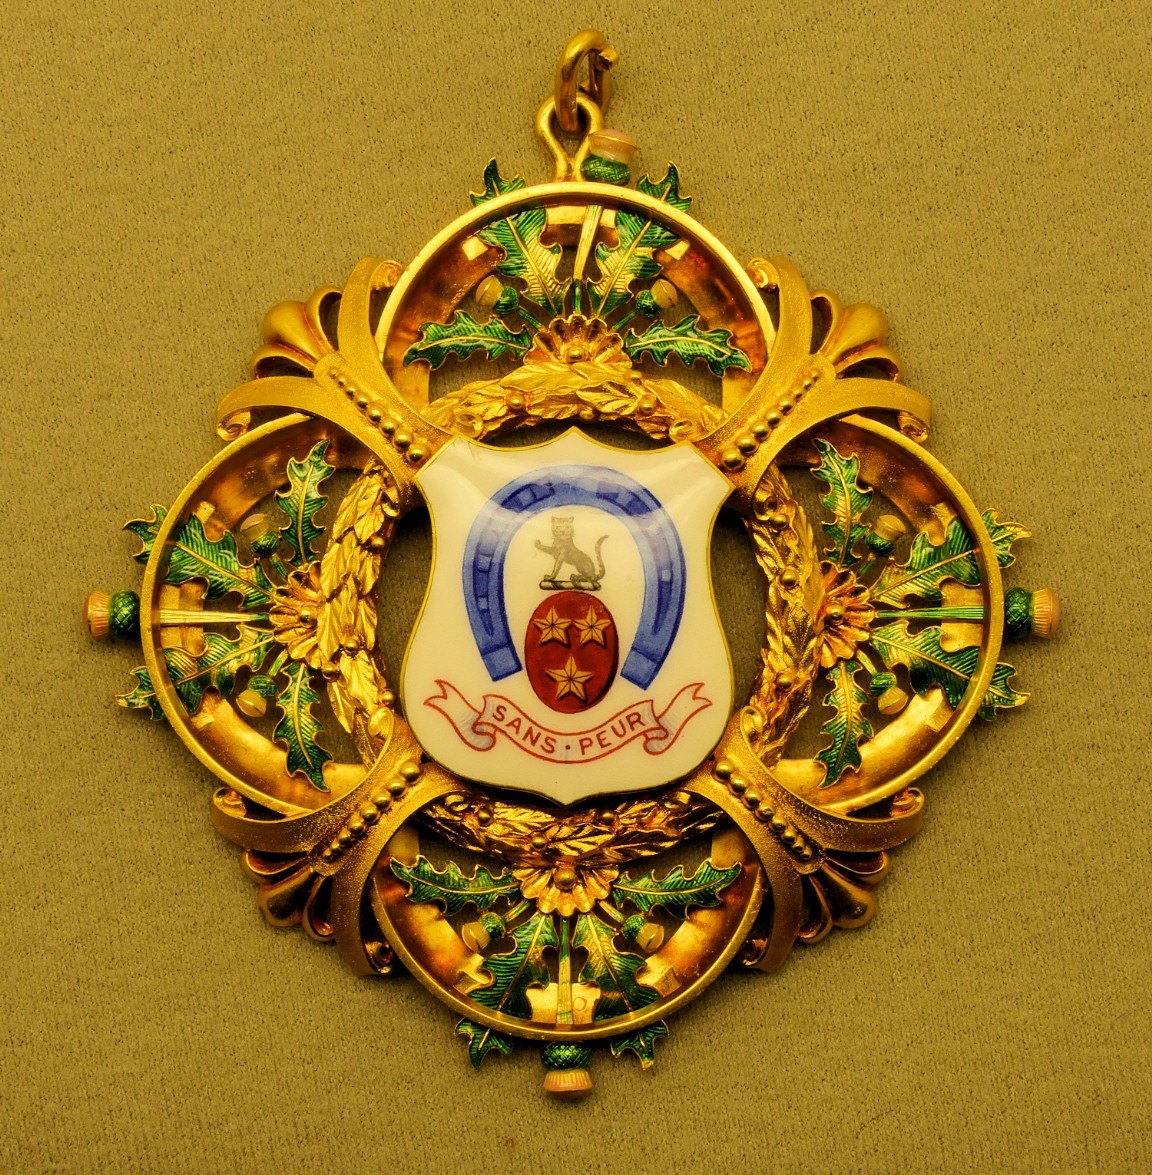 Dornoch Burgh Ceremonial Regalia – Enamelled Shield with Coat of Arms